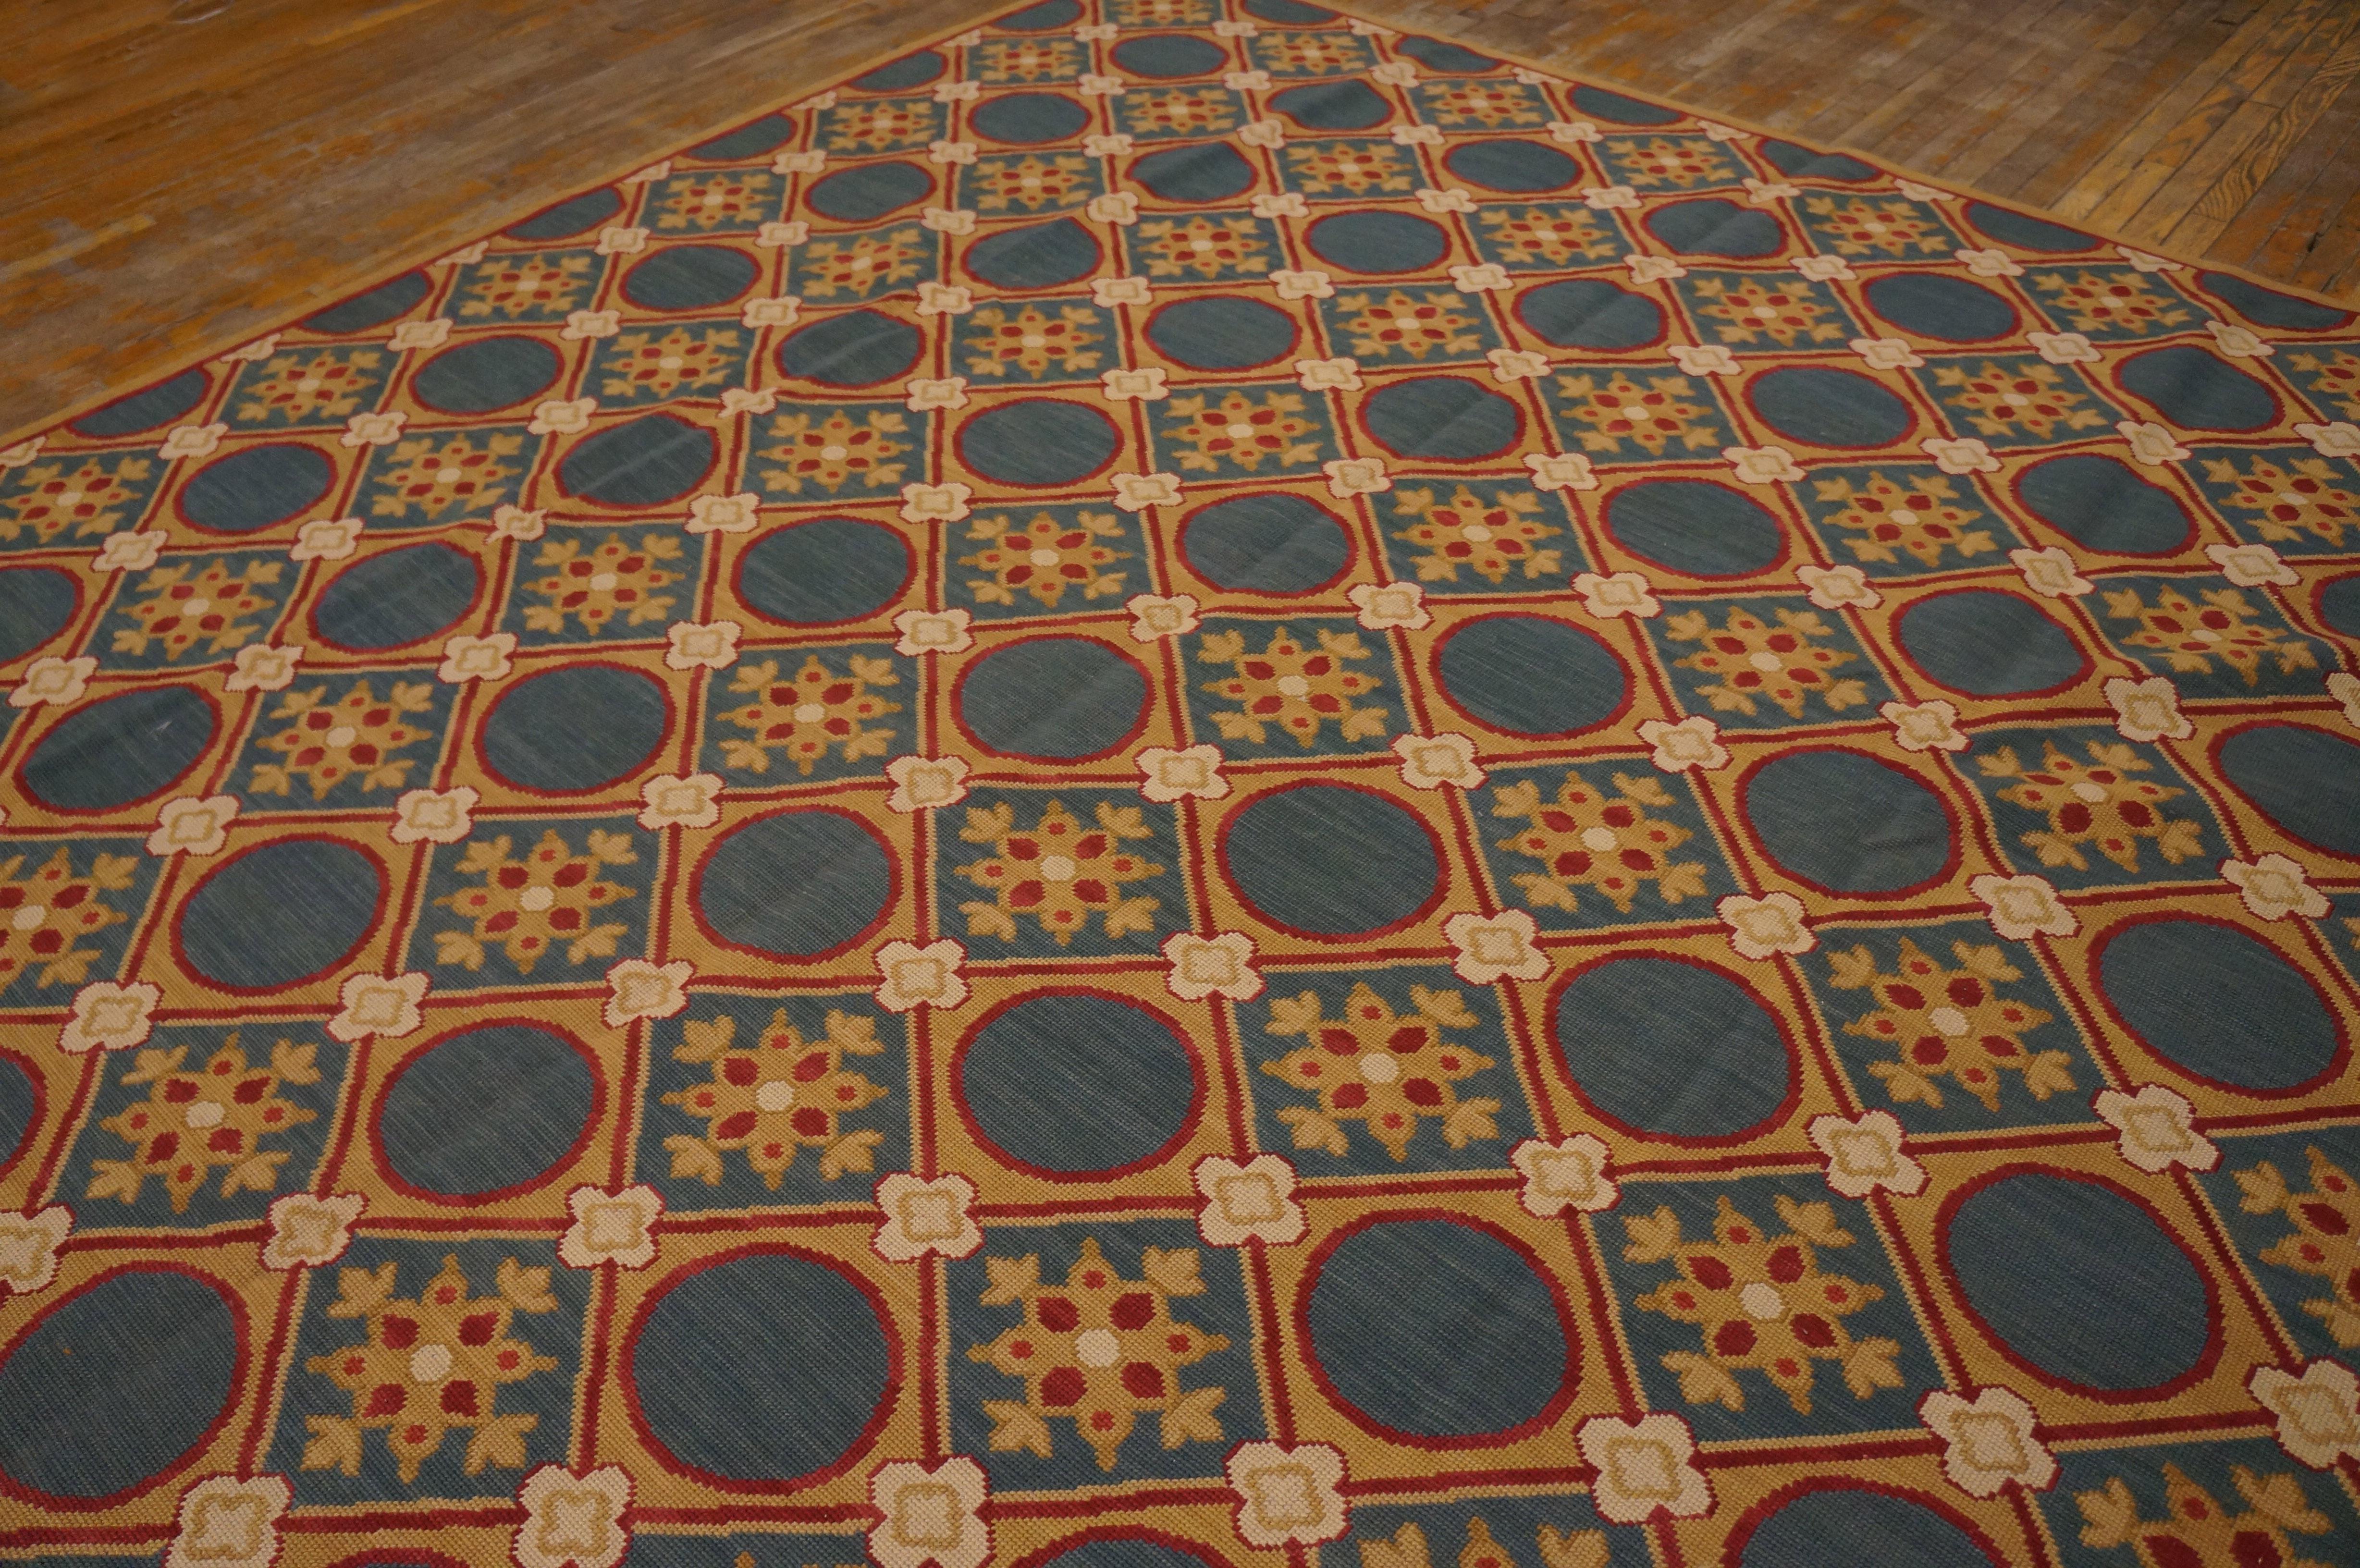  Contemporary Handwoven Needlepoint Flat Weave Carpet ( 9' x 12' - 275 x 365 cm  6